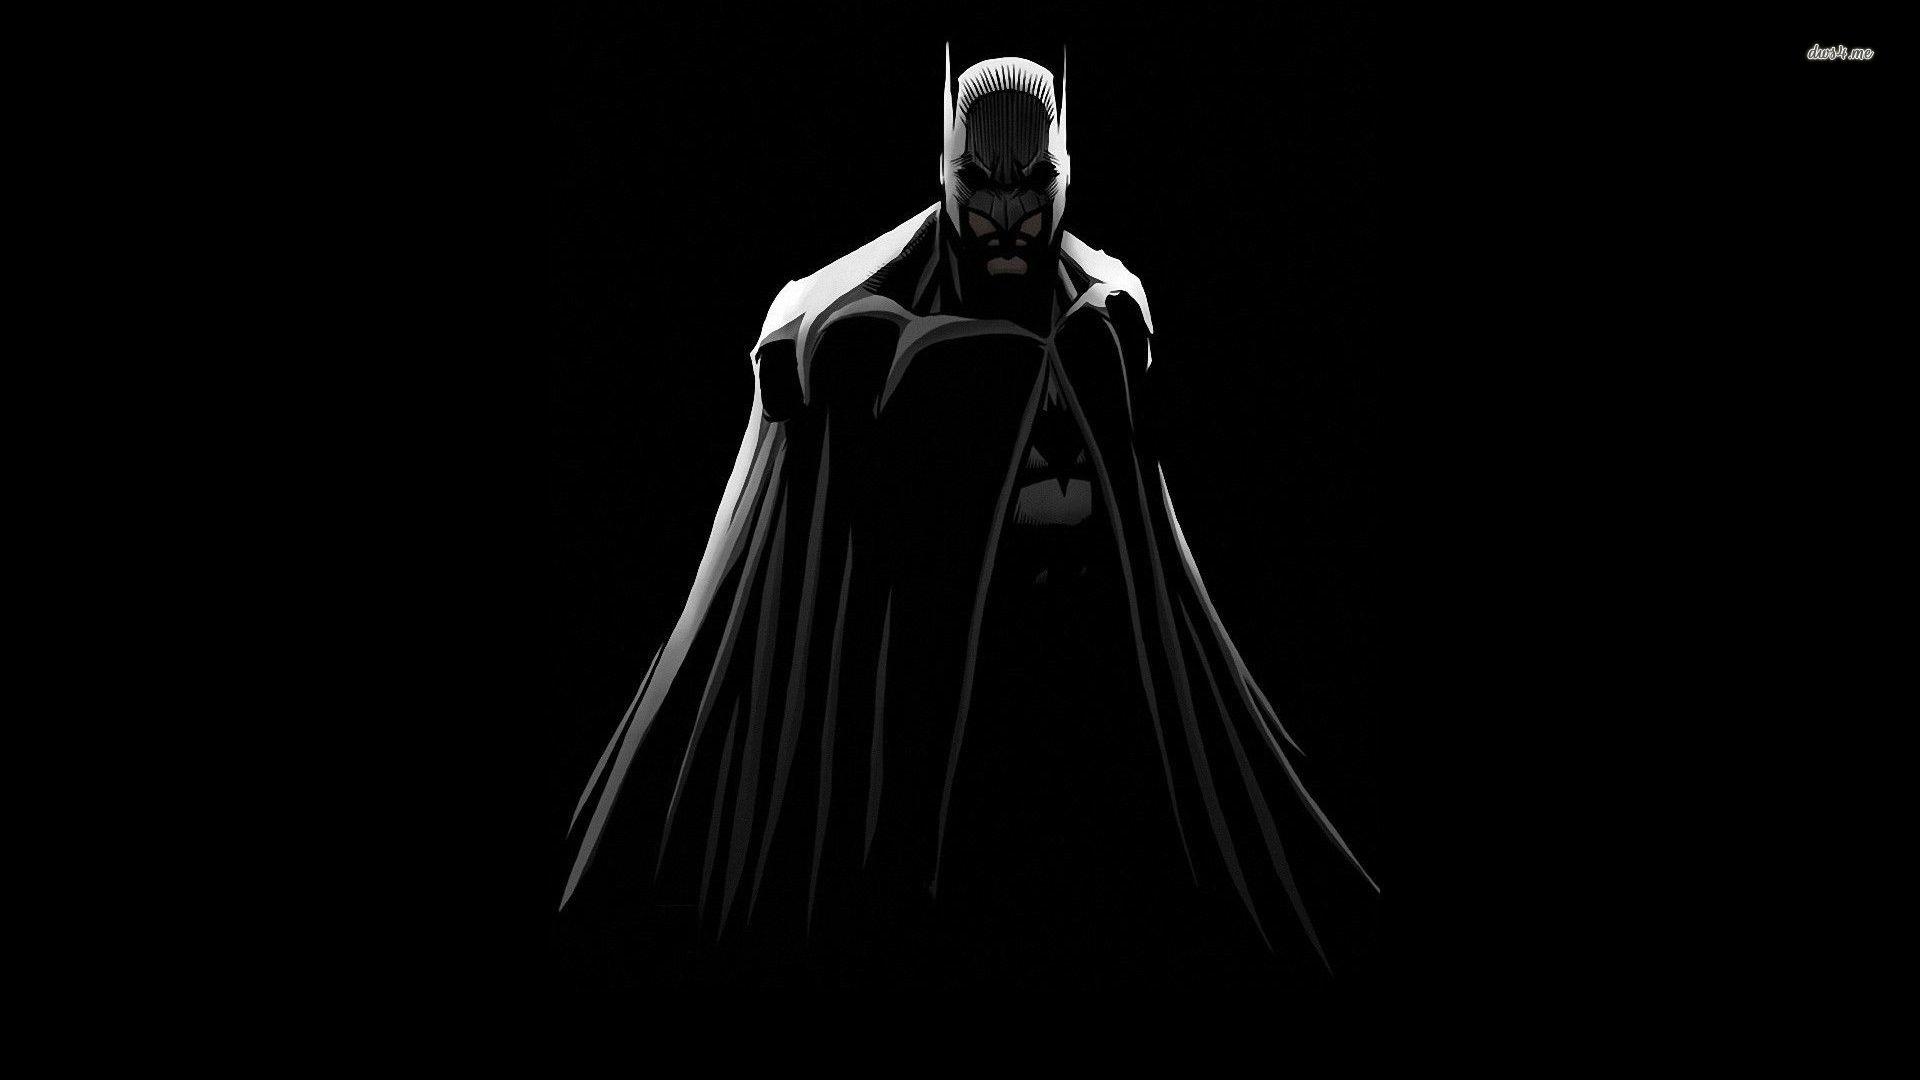 Batman in the darkness in The Dark Knight wallpaper